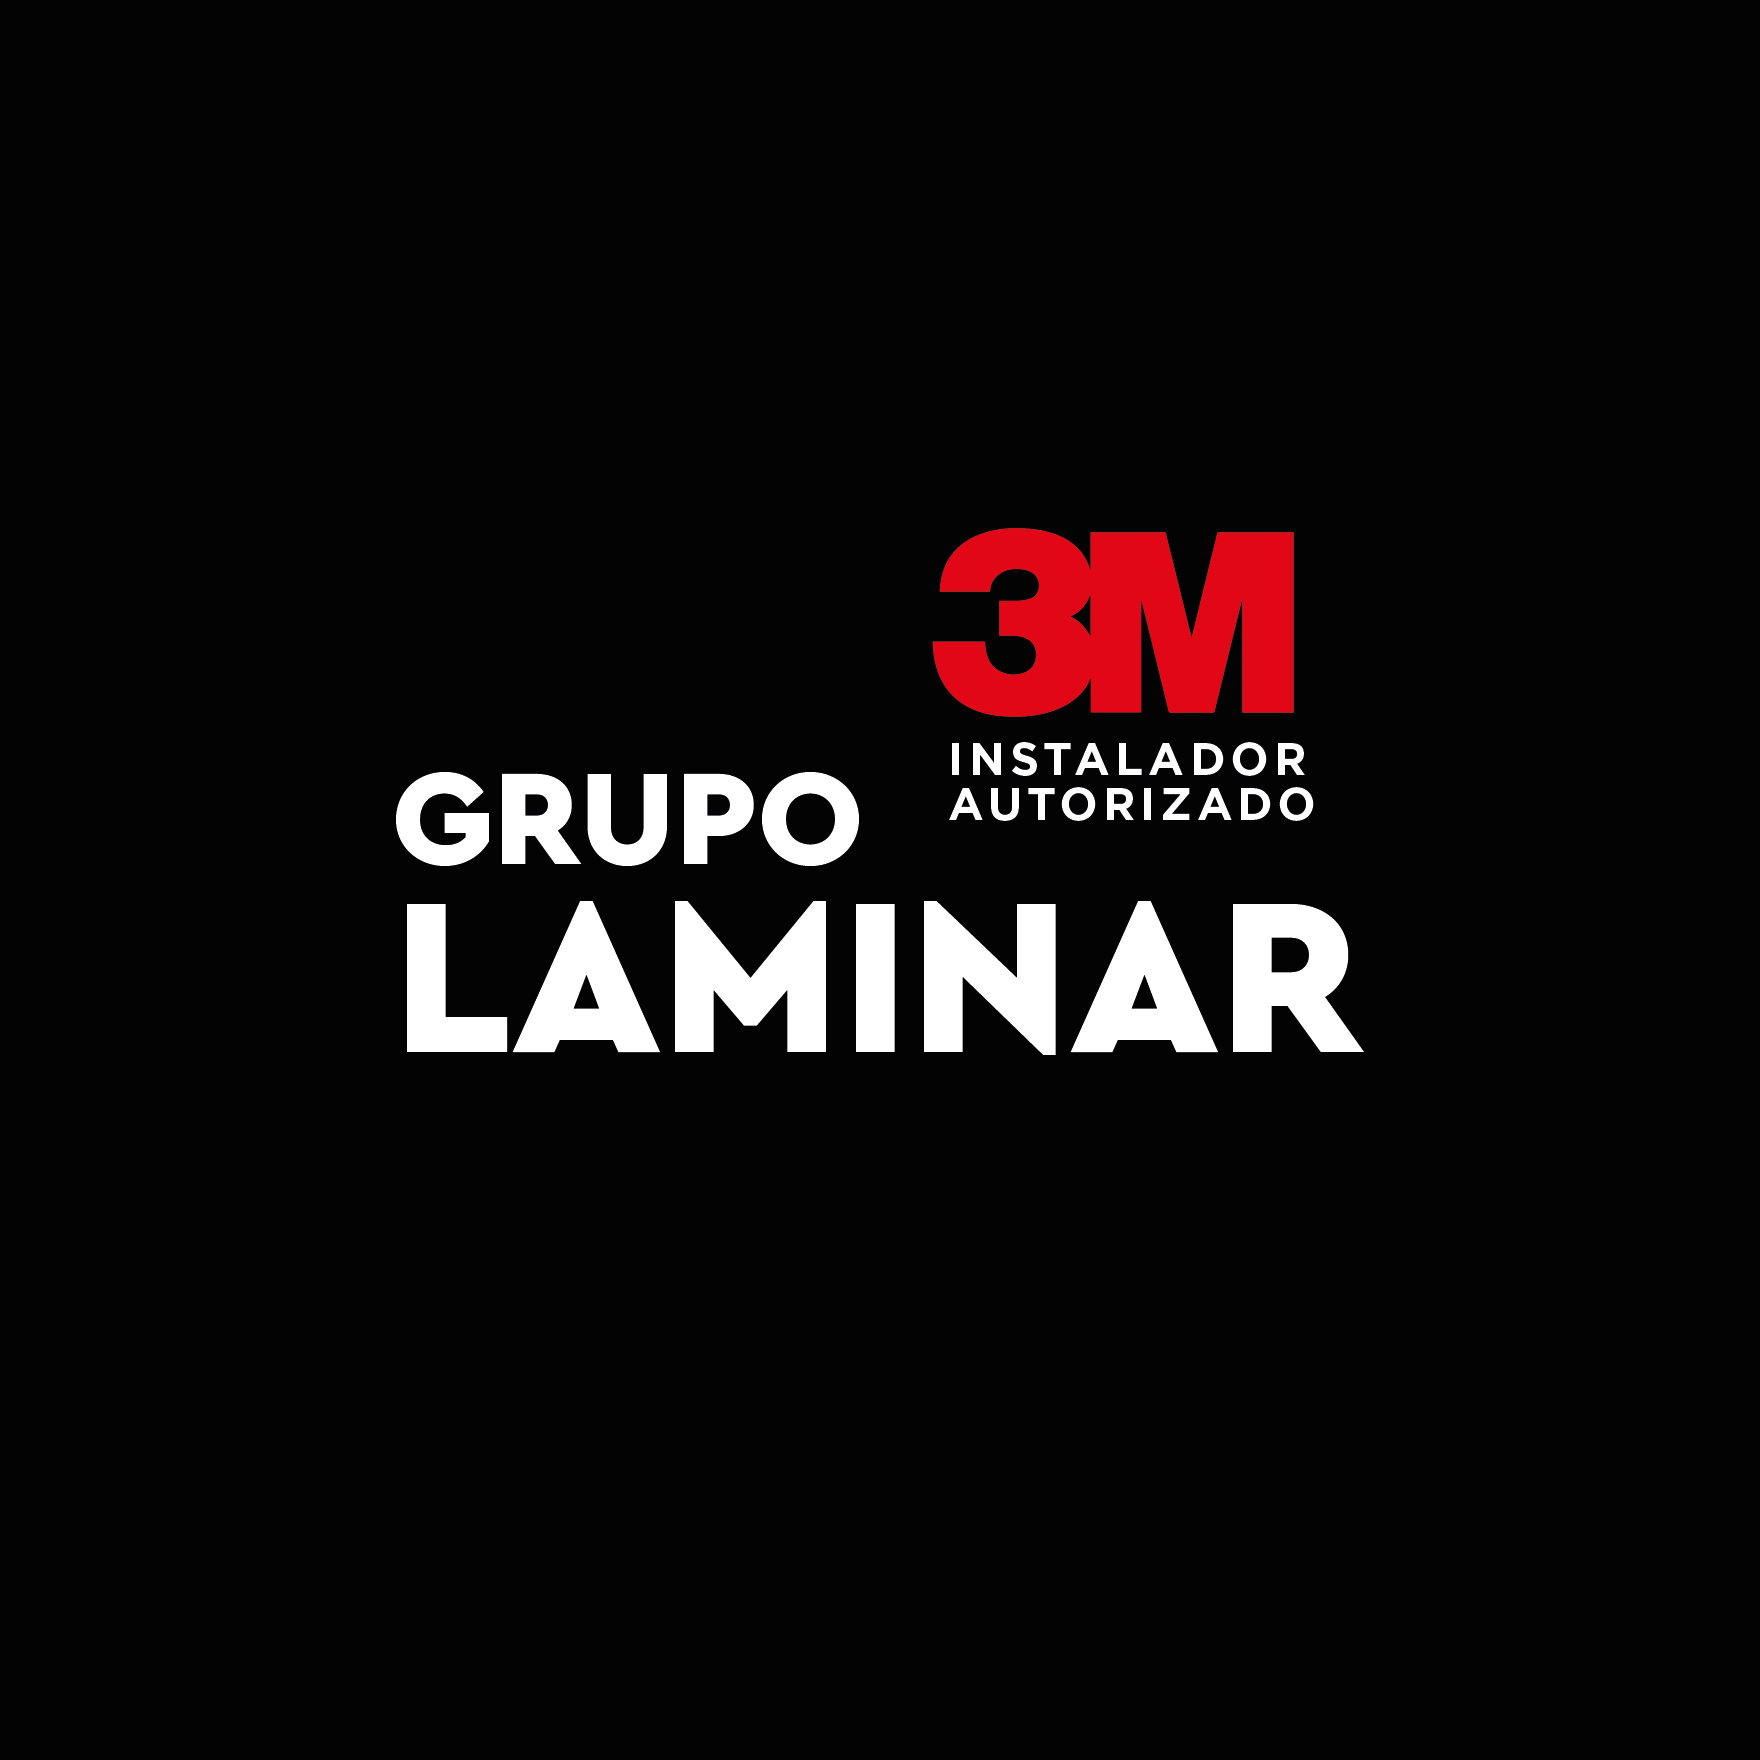 Grupo Laminar | 3M